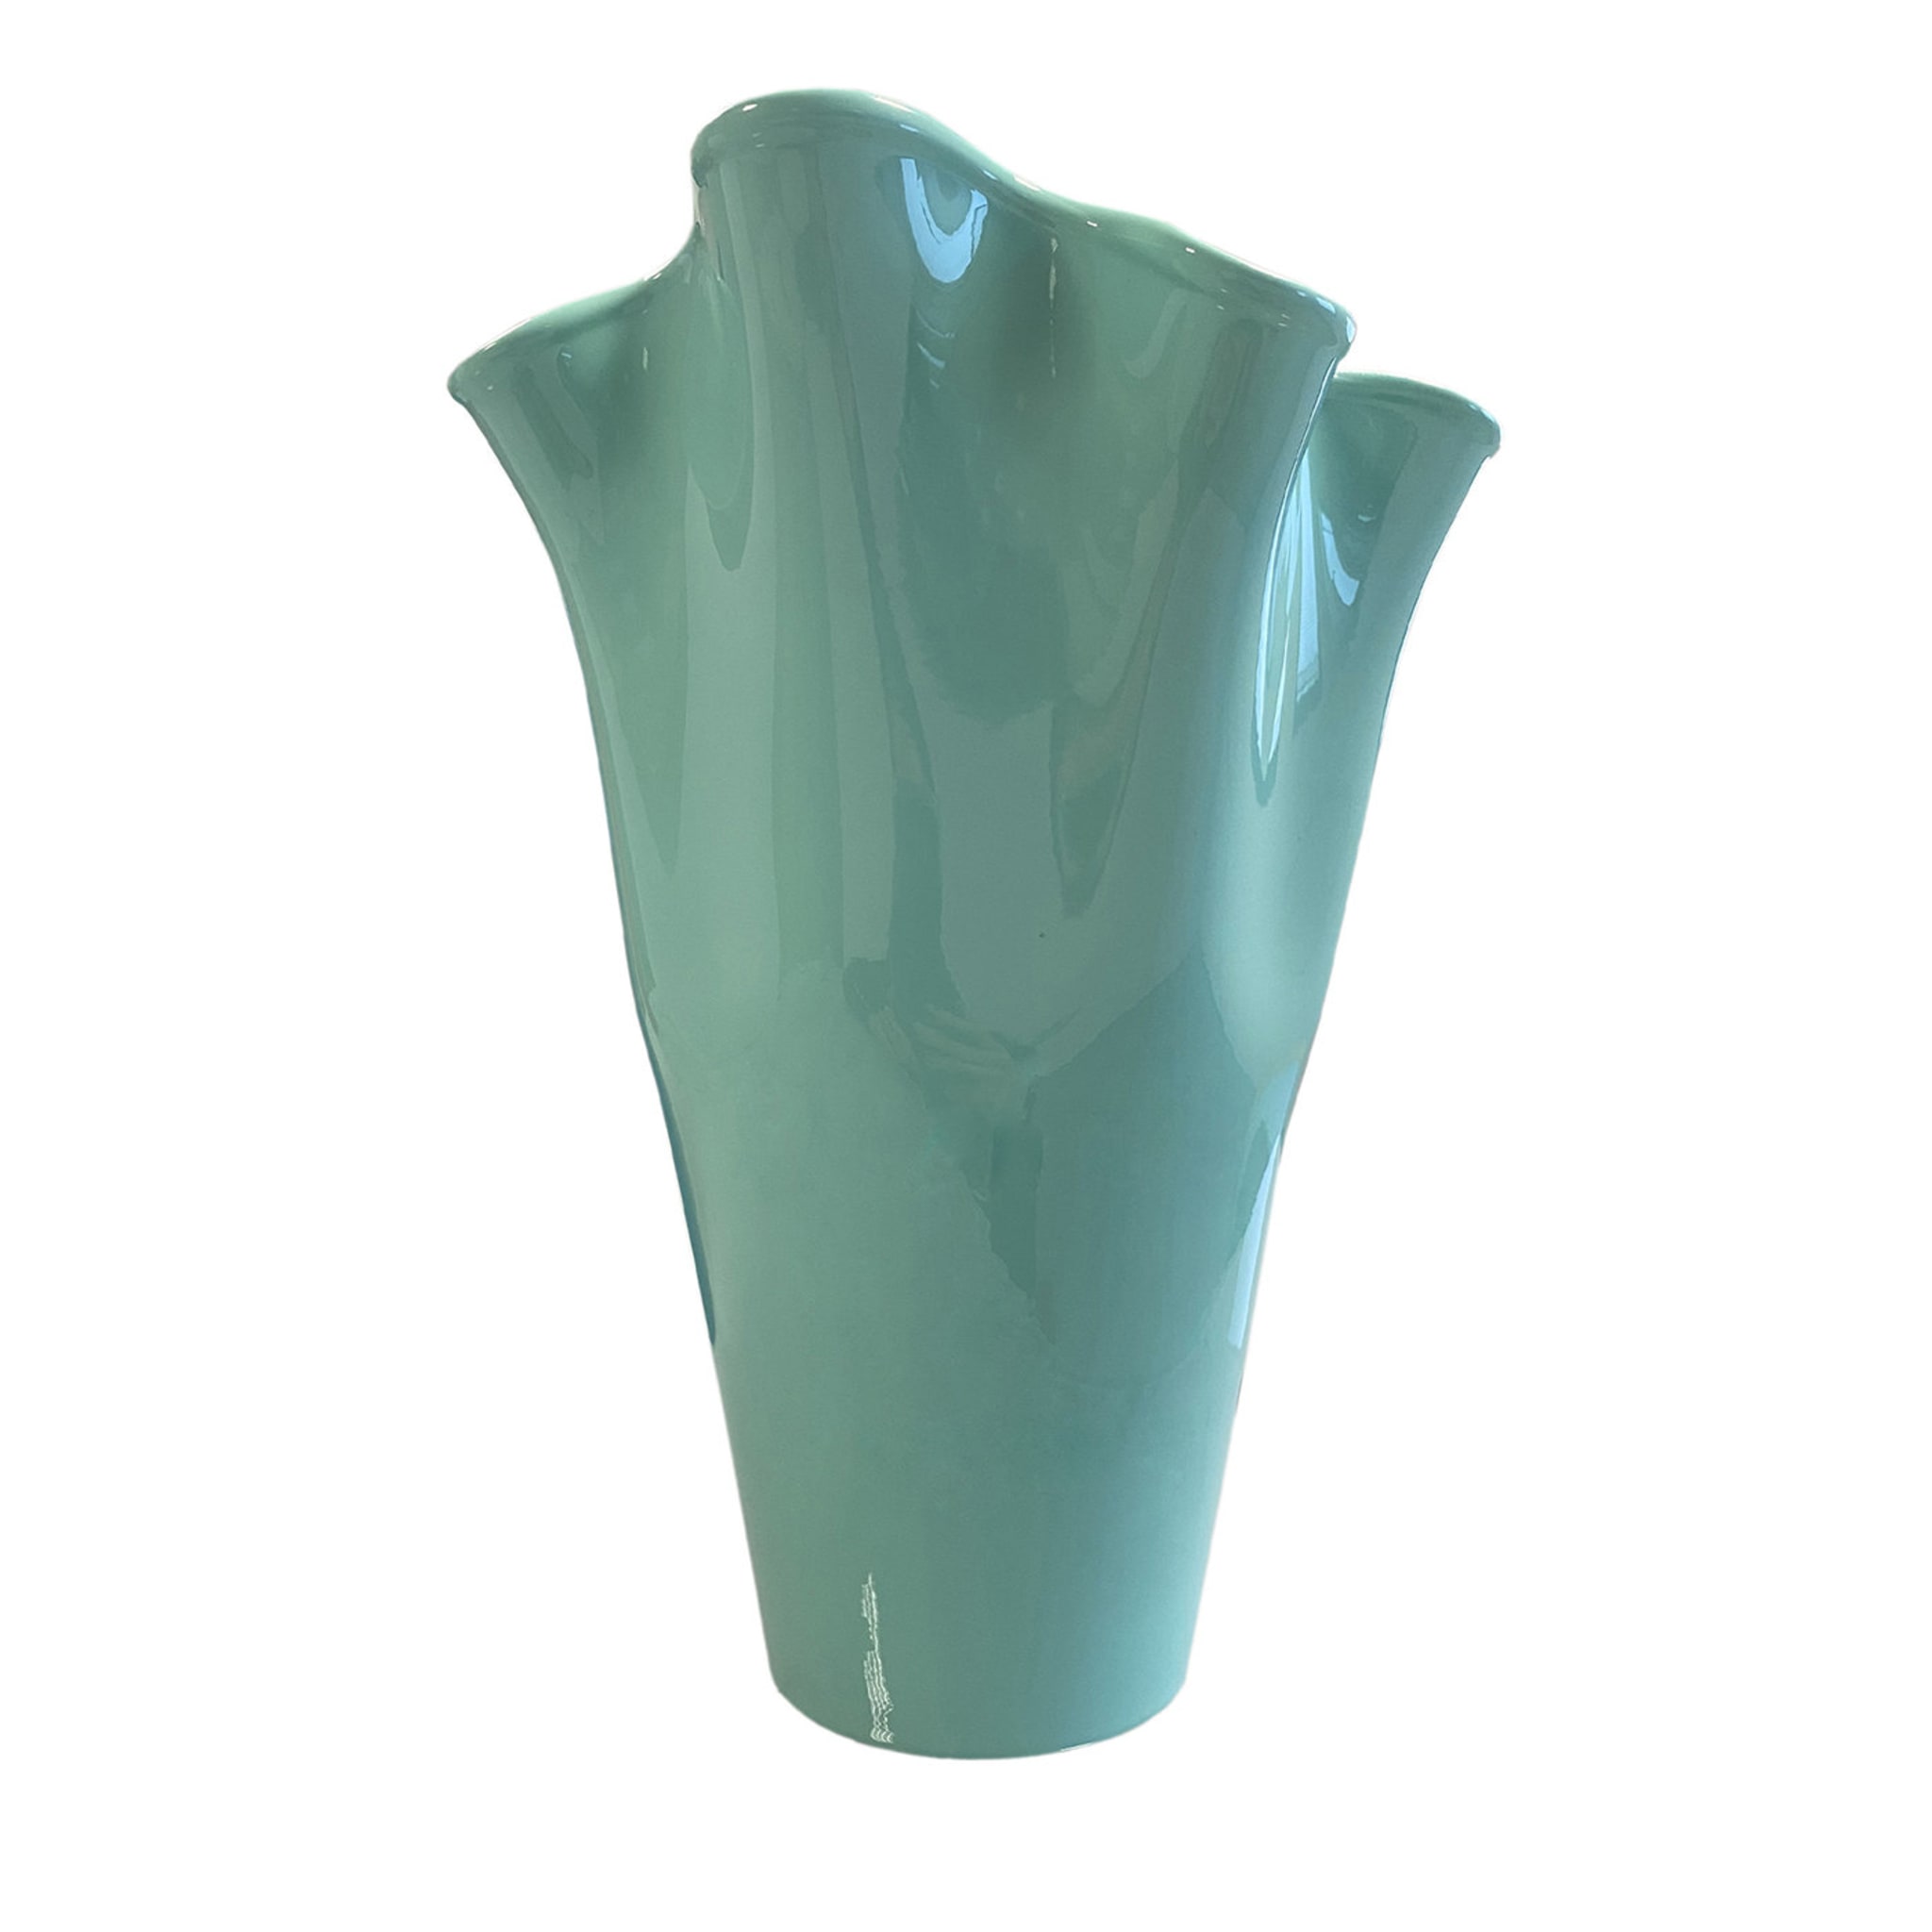 Velluto Light Blue Vase by Fabio Casali - Main view